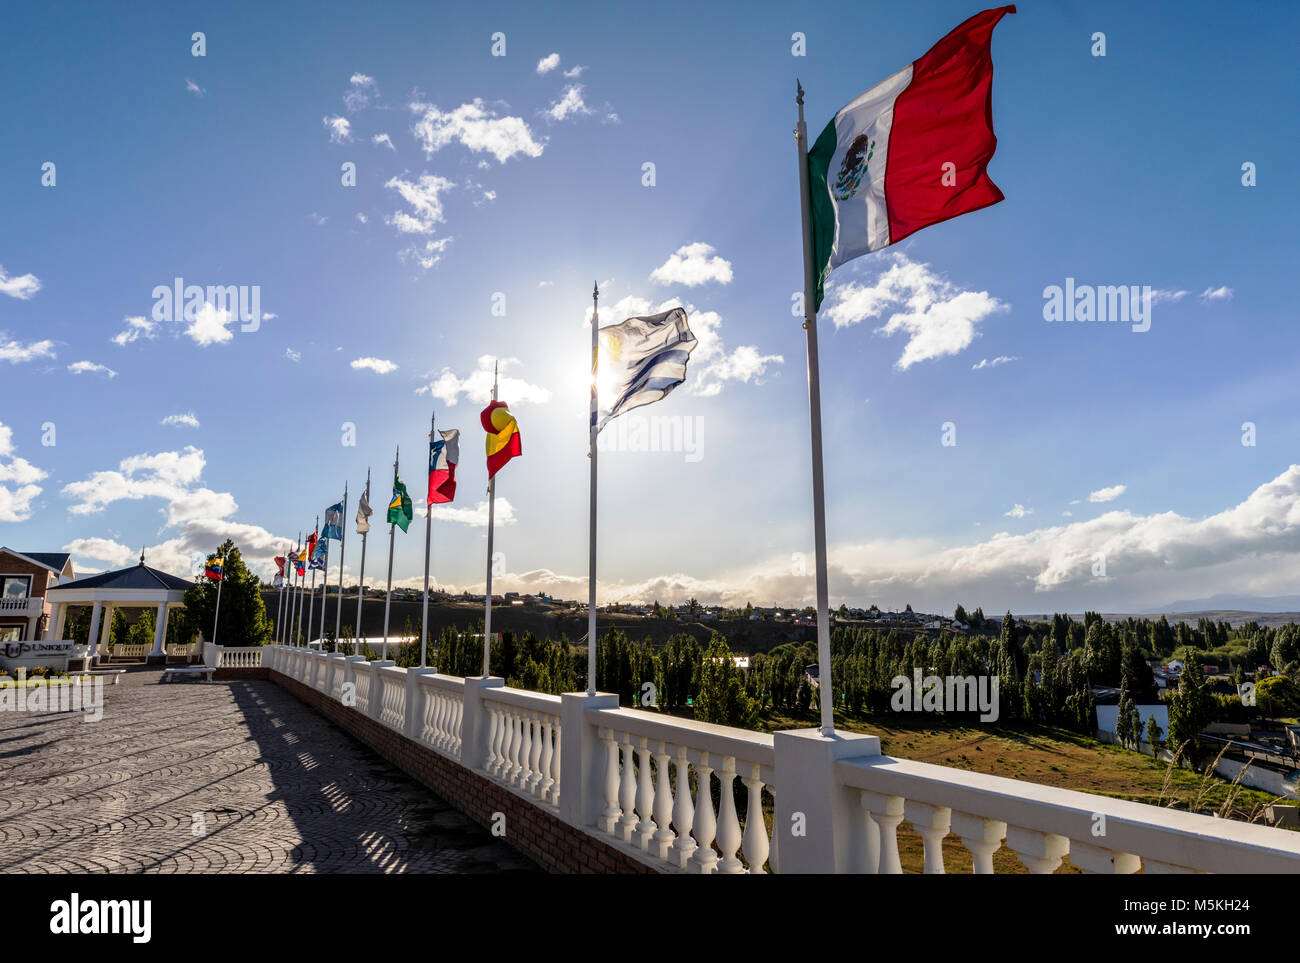 International flags flying; Hotel Unique Luxury; El Calafate; Argentina Stock Photo